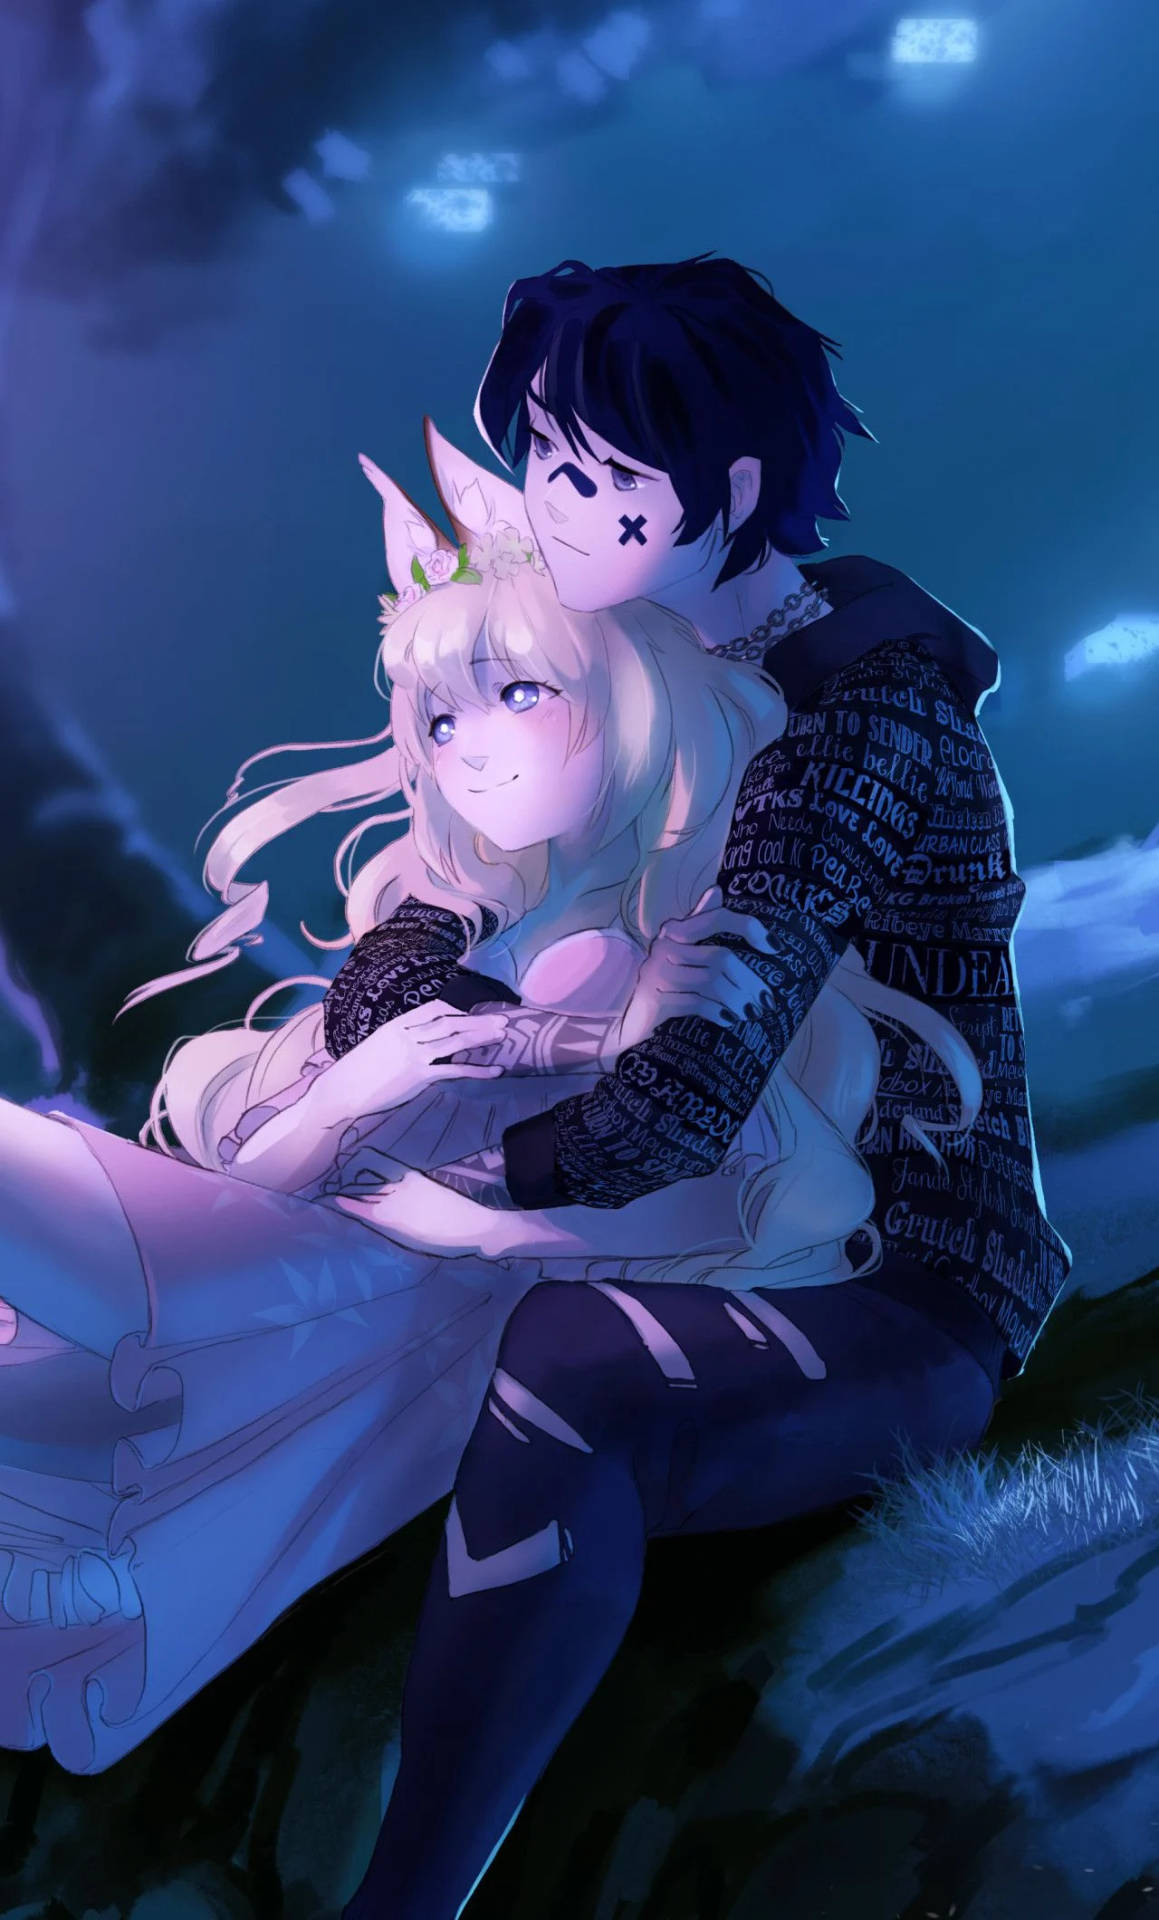 Anime Hug Under Night Sky Background